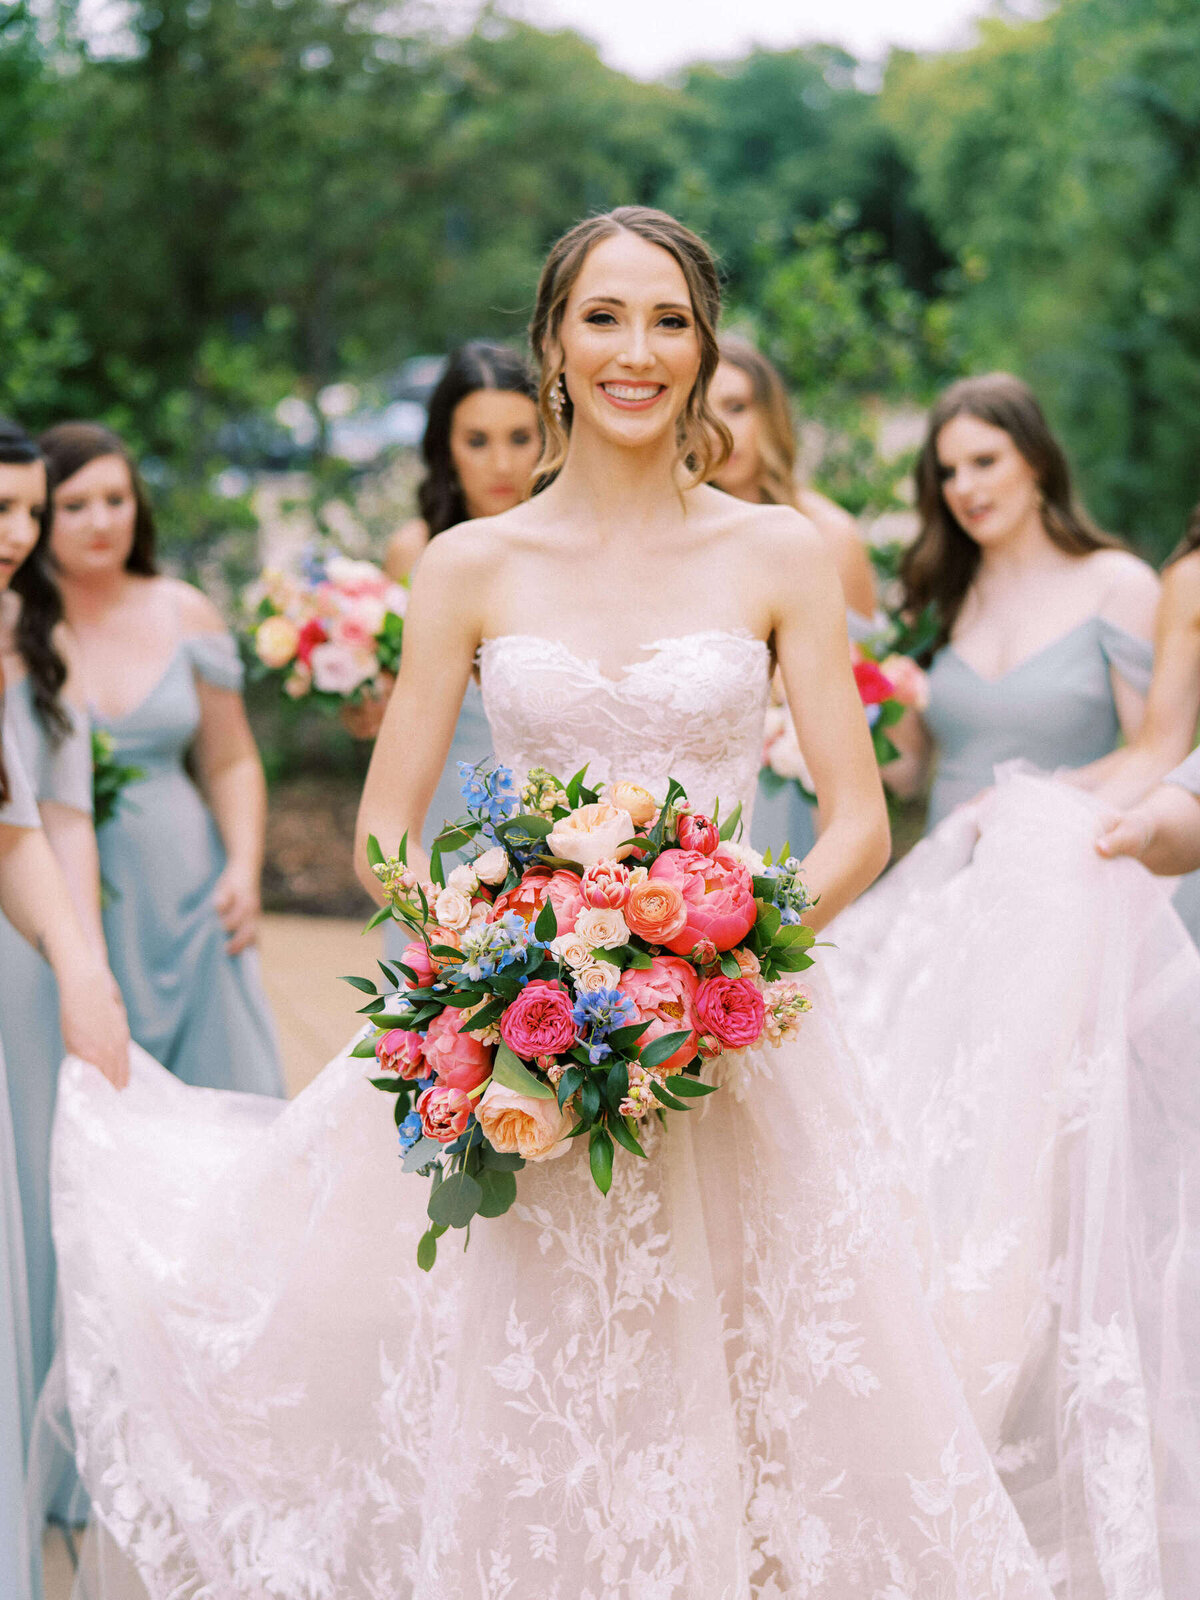 Joyful bride smiles wearing her Monique Lhuillier wedding dress and holding colorful bouquet